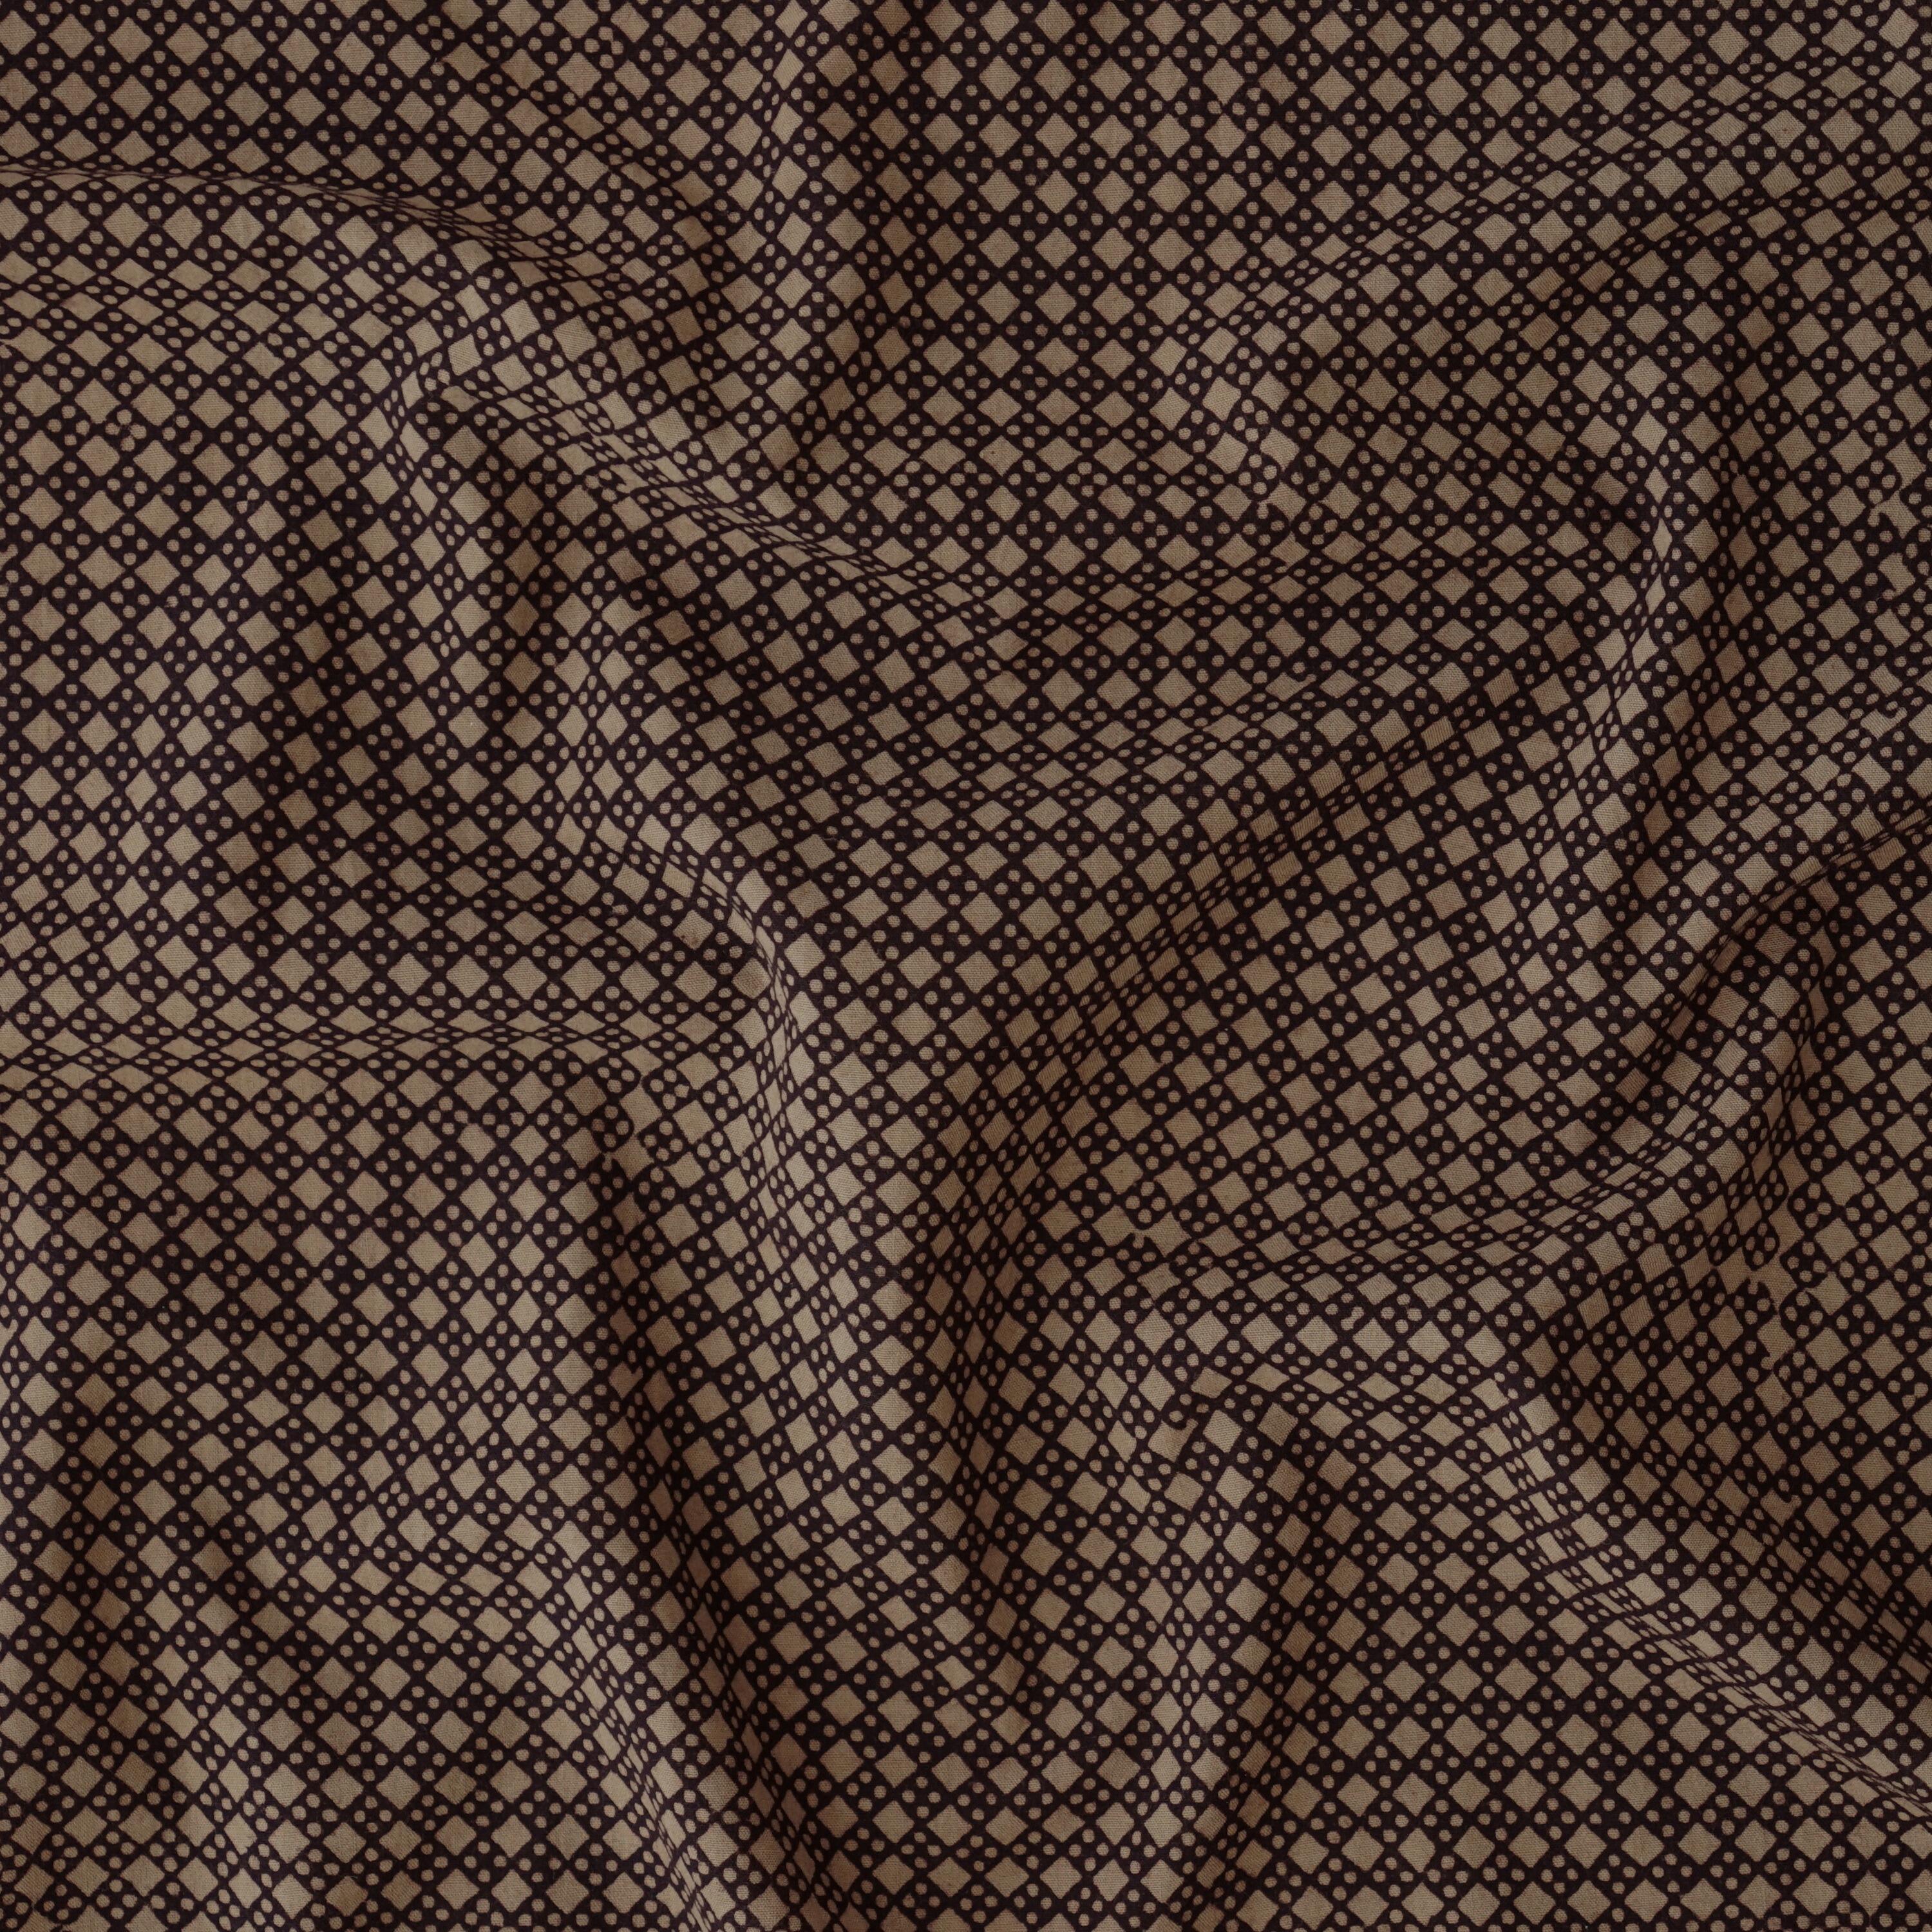 100% Block-Printed Cotton Fabric From India - Bagh Method - Iron Rust Black & Indigosol Khaki - Pressure Point Print - Contrast